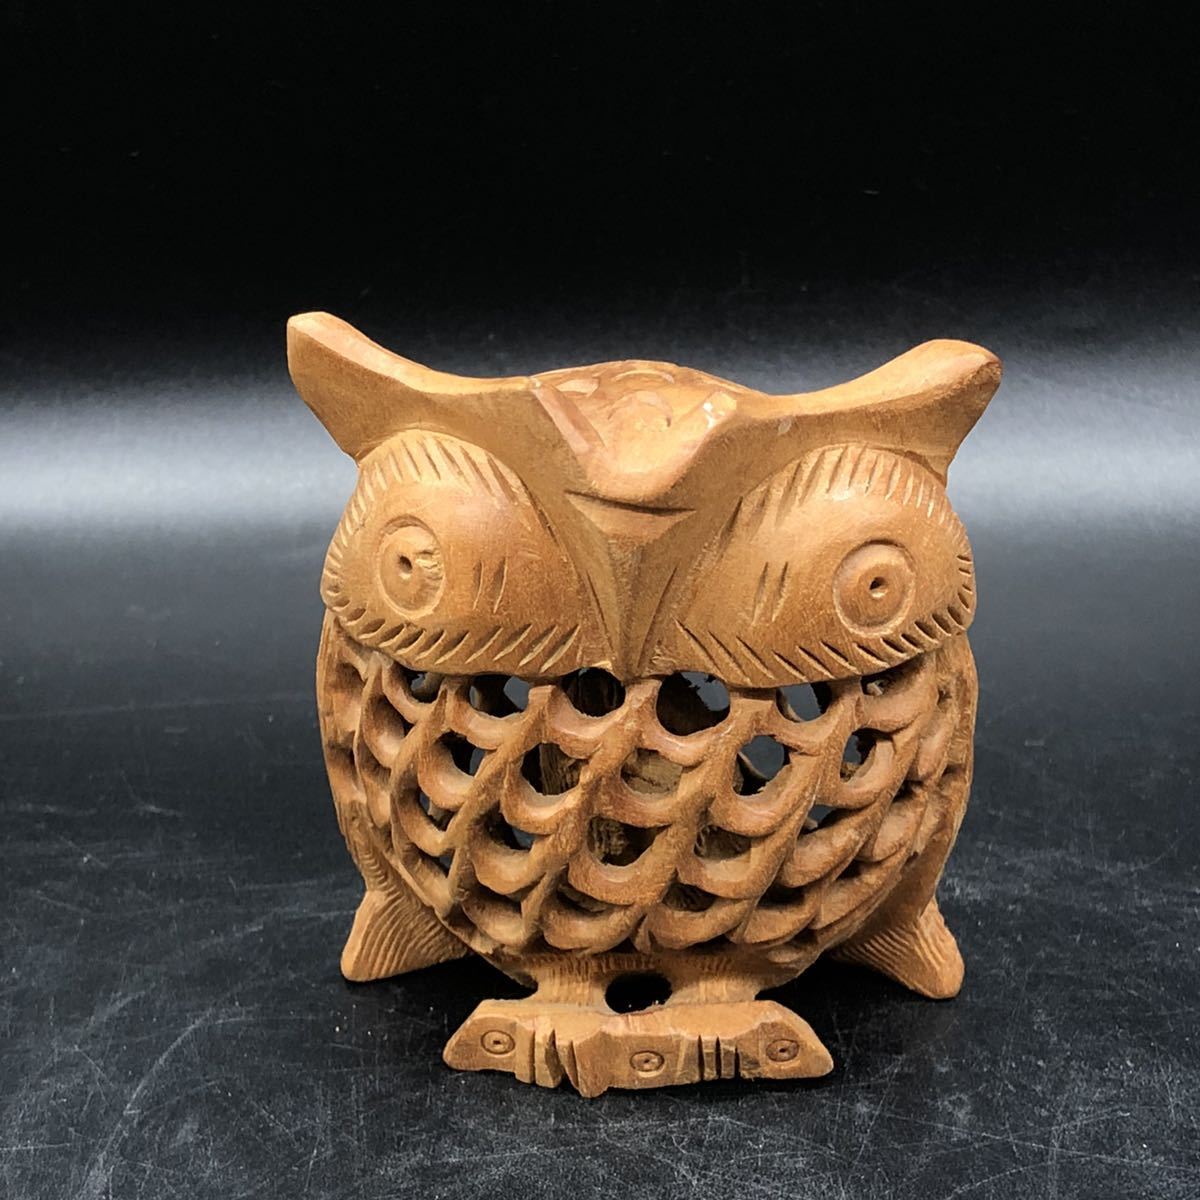 Owl parent and child openwork carving wooden feng shui goods/good luck goods (owl owl) bird figurine natural wood wood carving handmade W24-11, sculpture, object, oriental sculpture, others